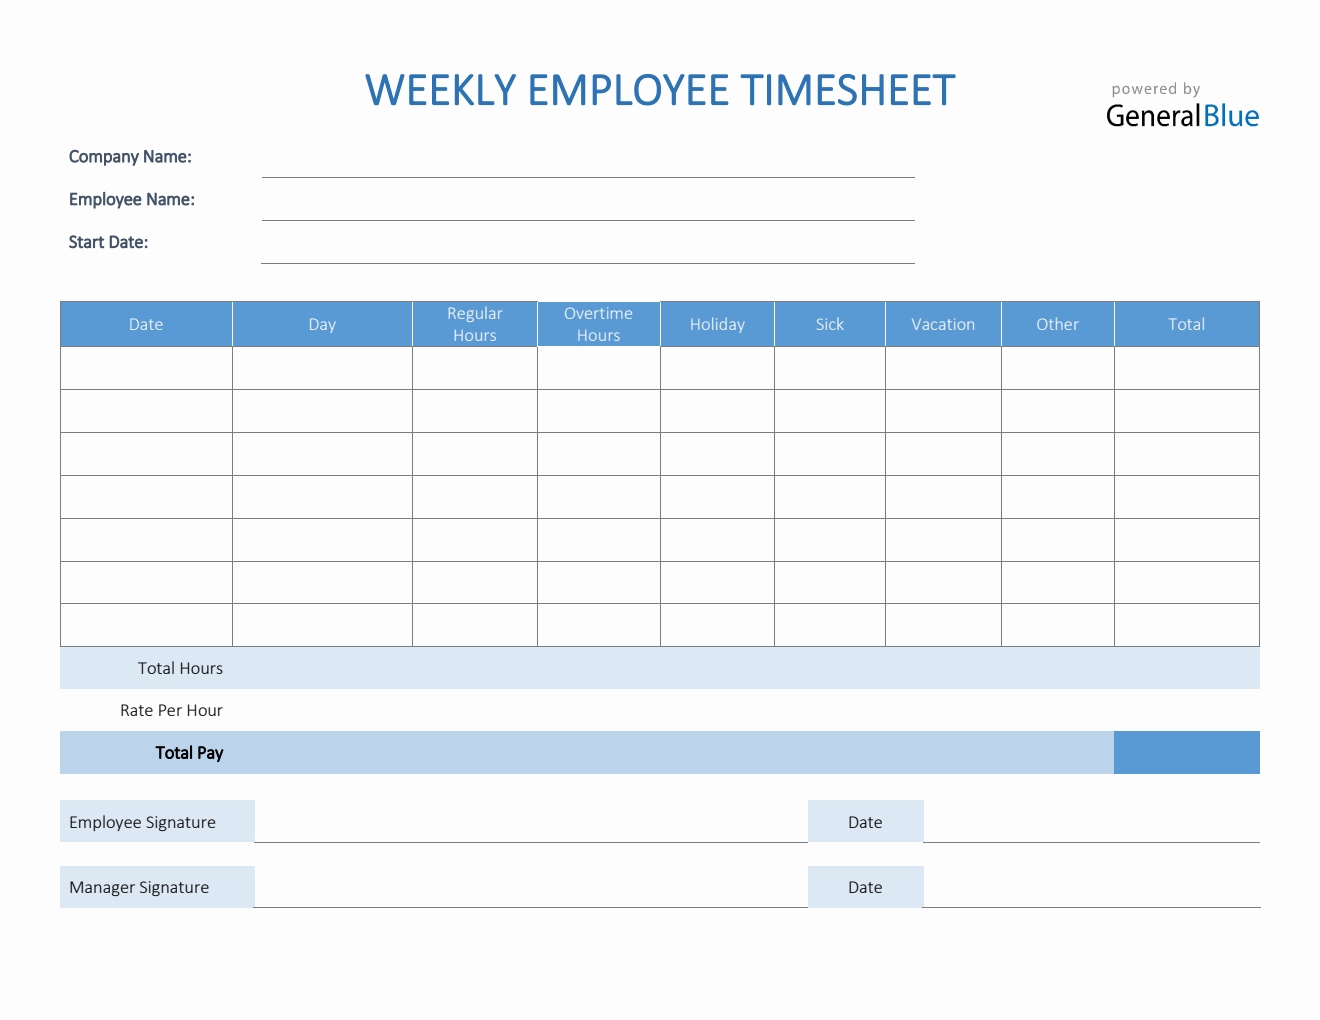 Weekly Employee Timesheet in Word